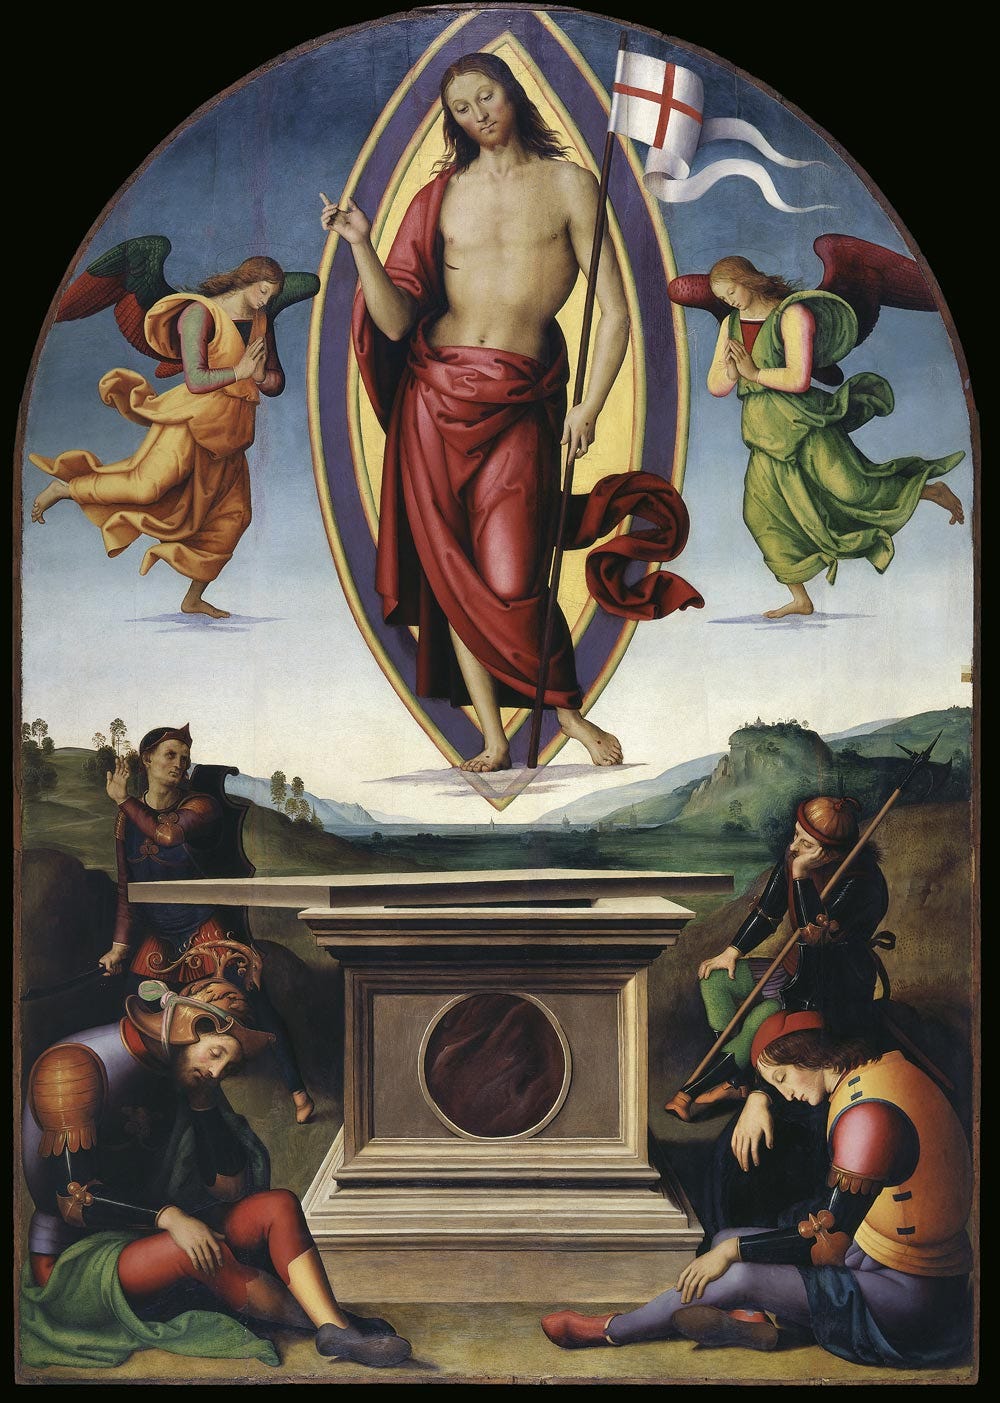 Perugino, Resurrection (1499; oil on panel, 233 x 165 cm; Vatican City, Apostolic Palace)